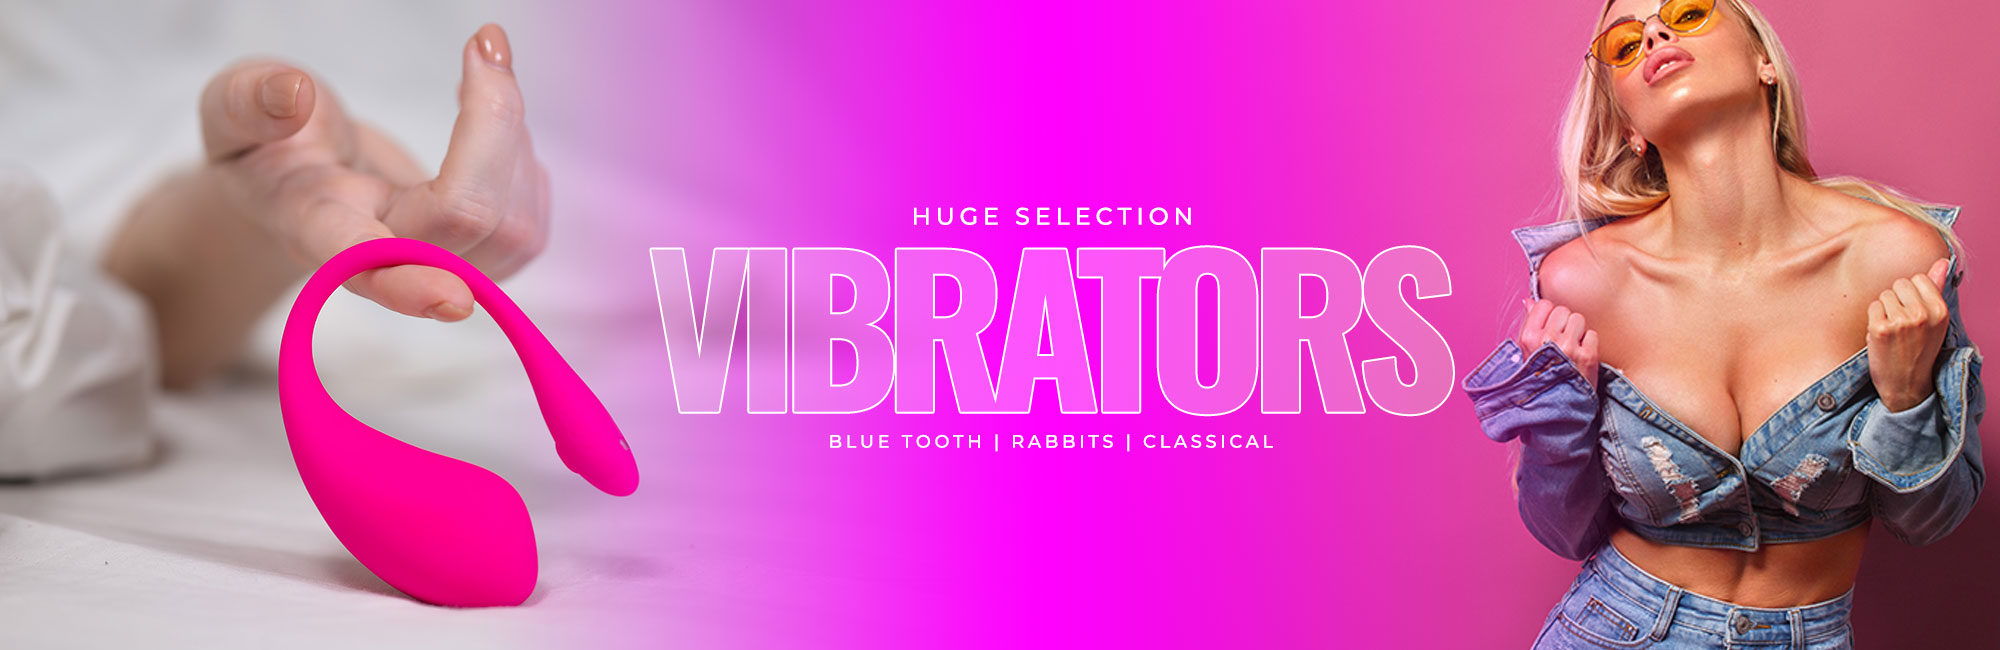 Huge Selection of Vibrators at Pleasure Cartel Online Sex Toy Store